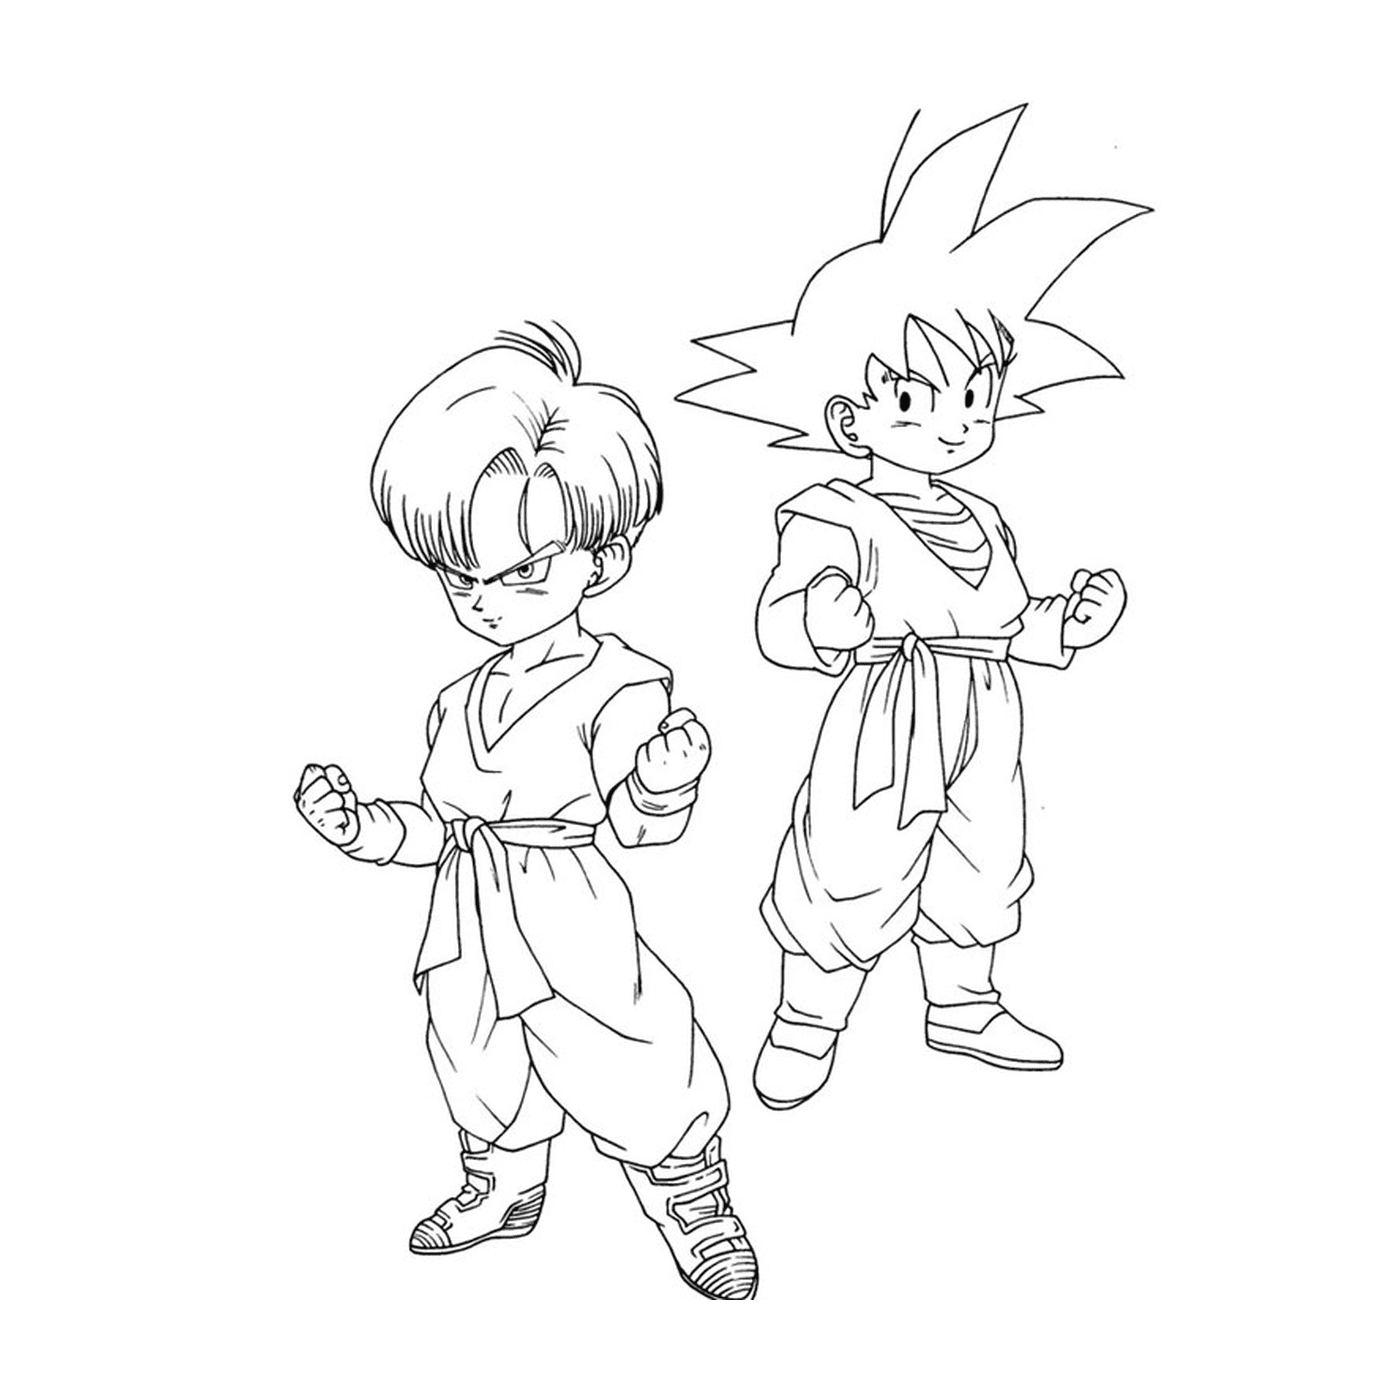  Goku y Gohan hijo de Dragon Ball Z 